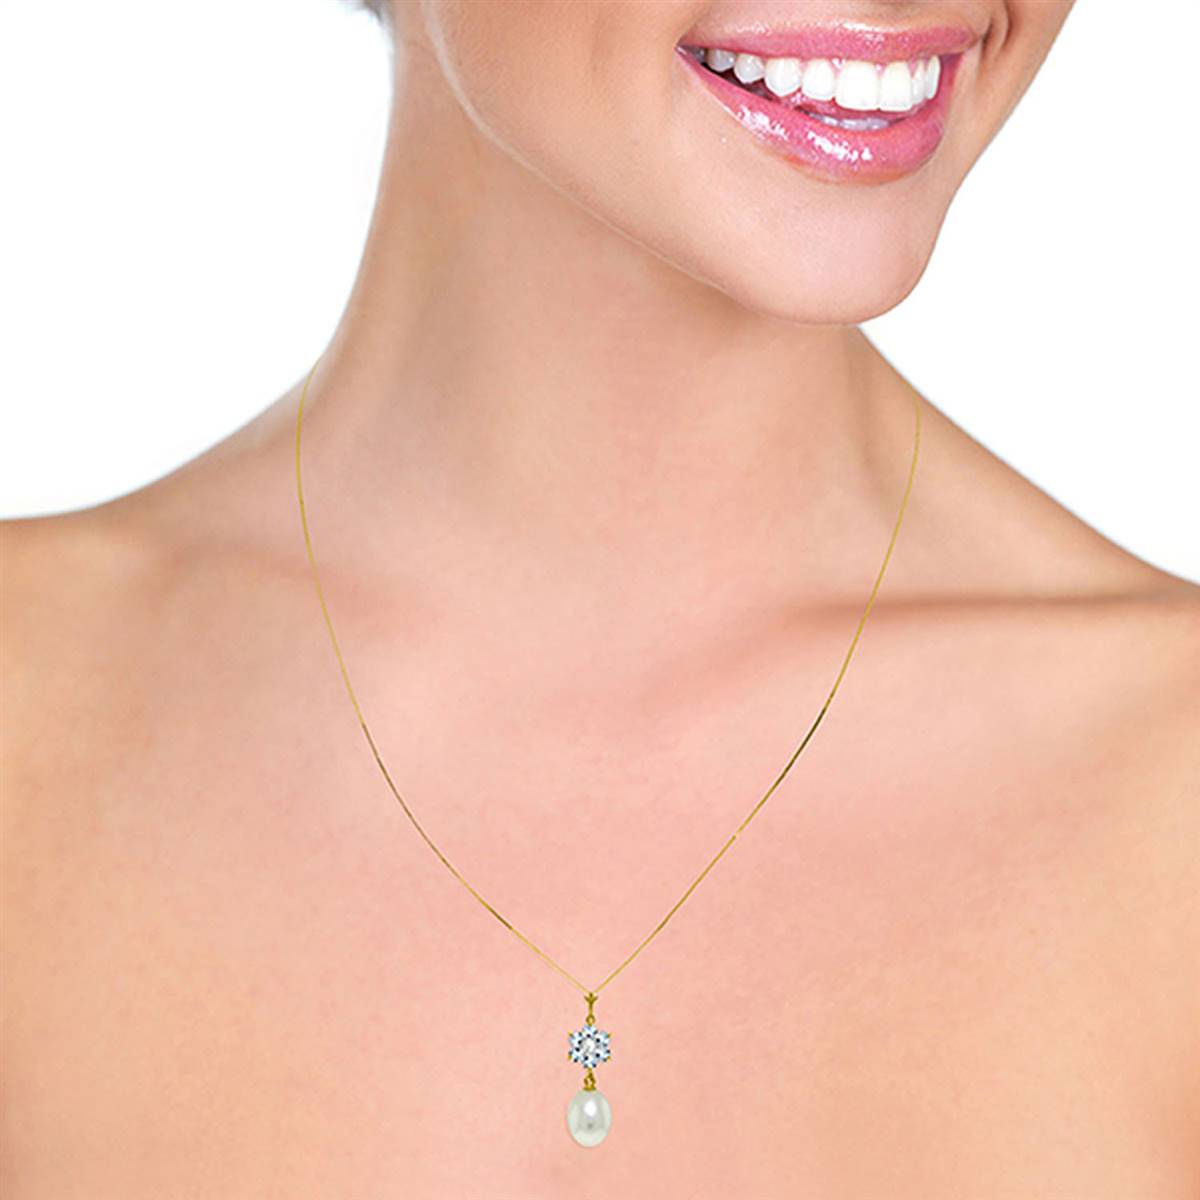 4.53 Carat 14K Solid Yellow Gold Necklace Natural Pearl, Aquamarine Diamond